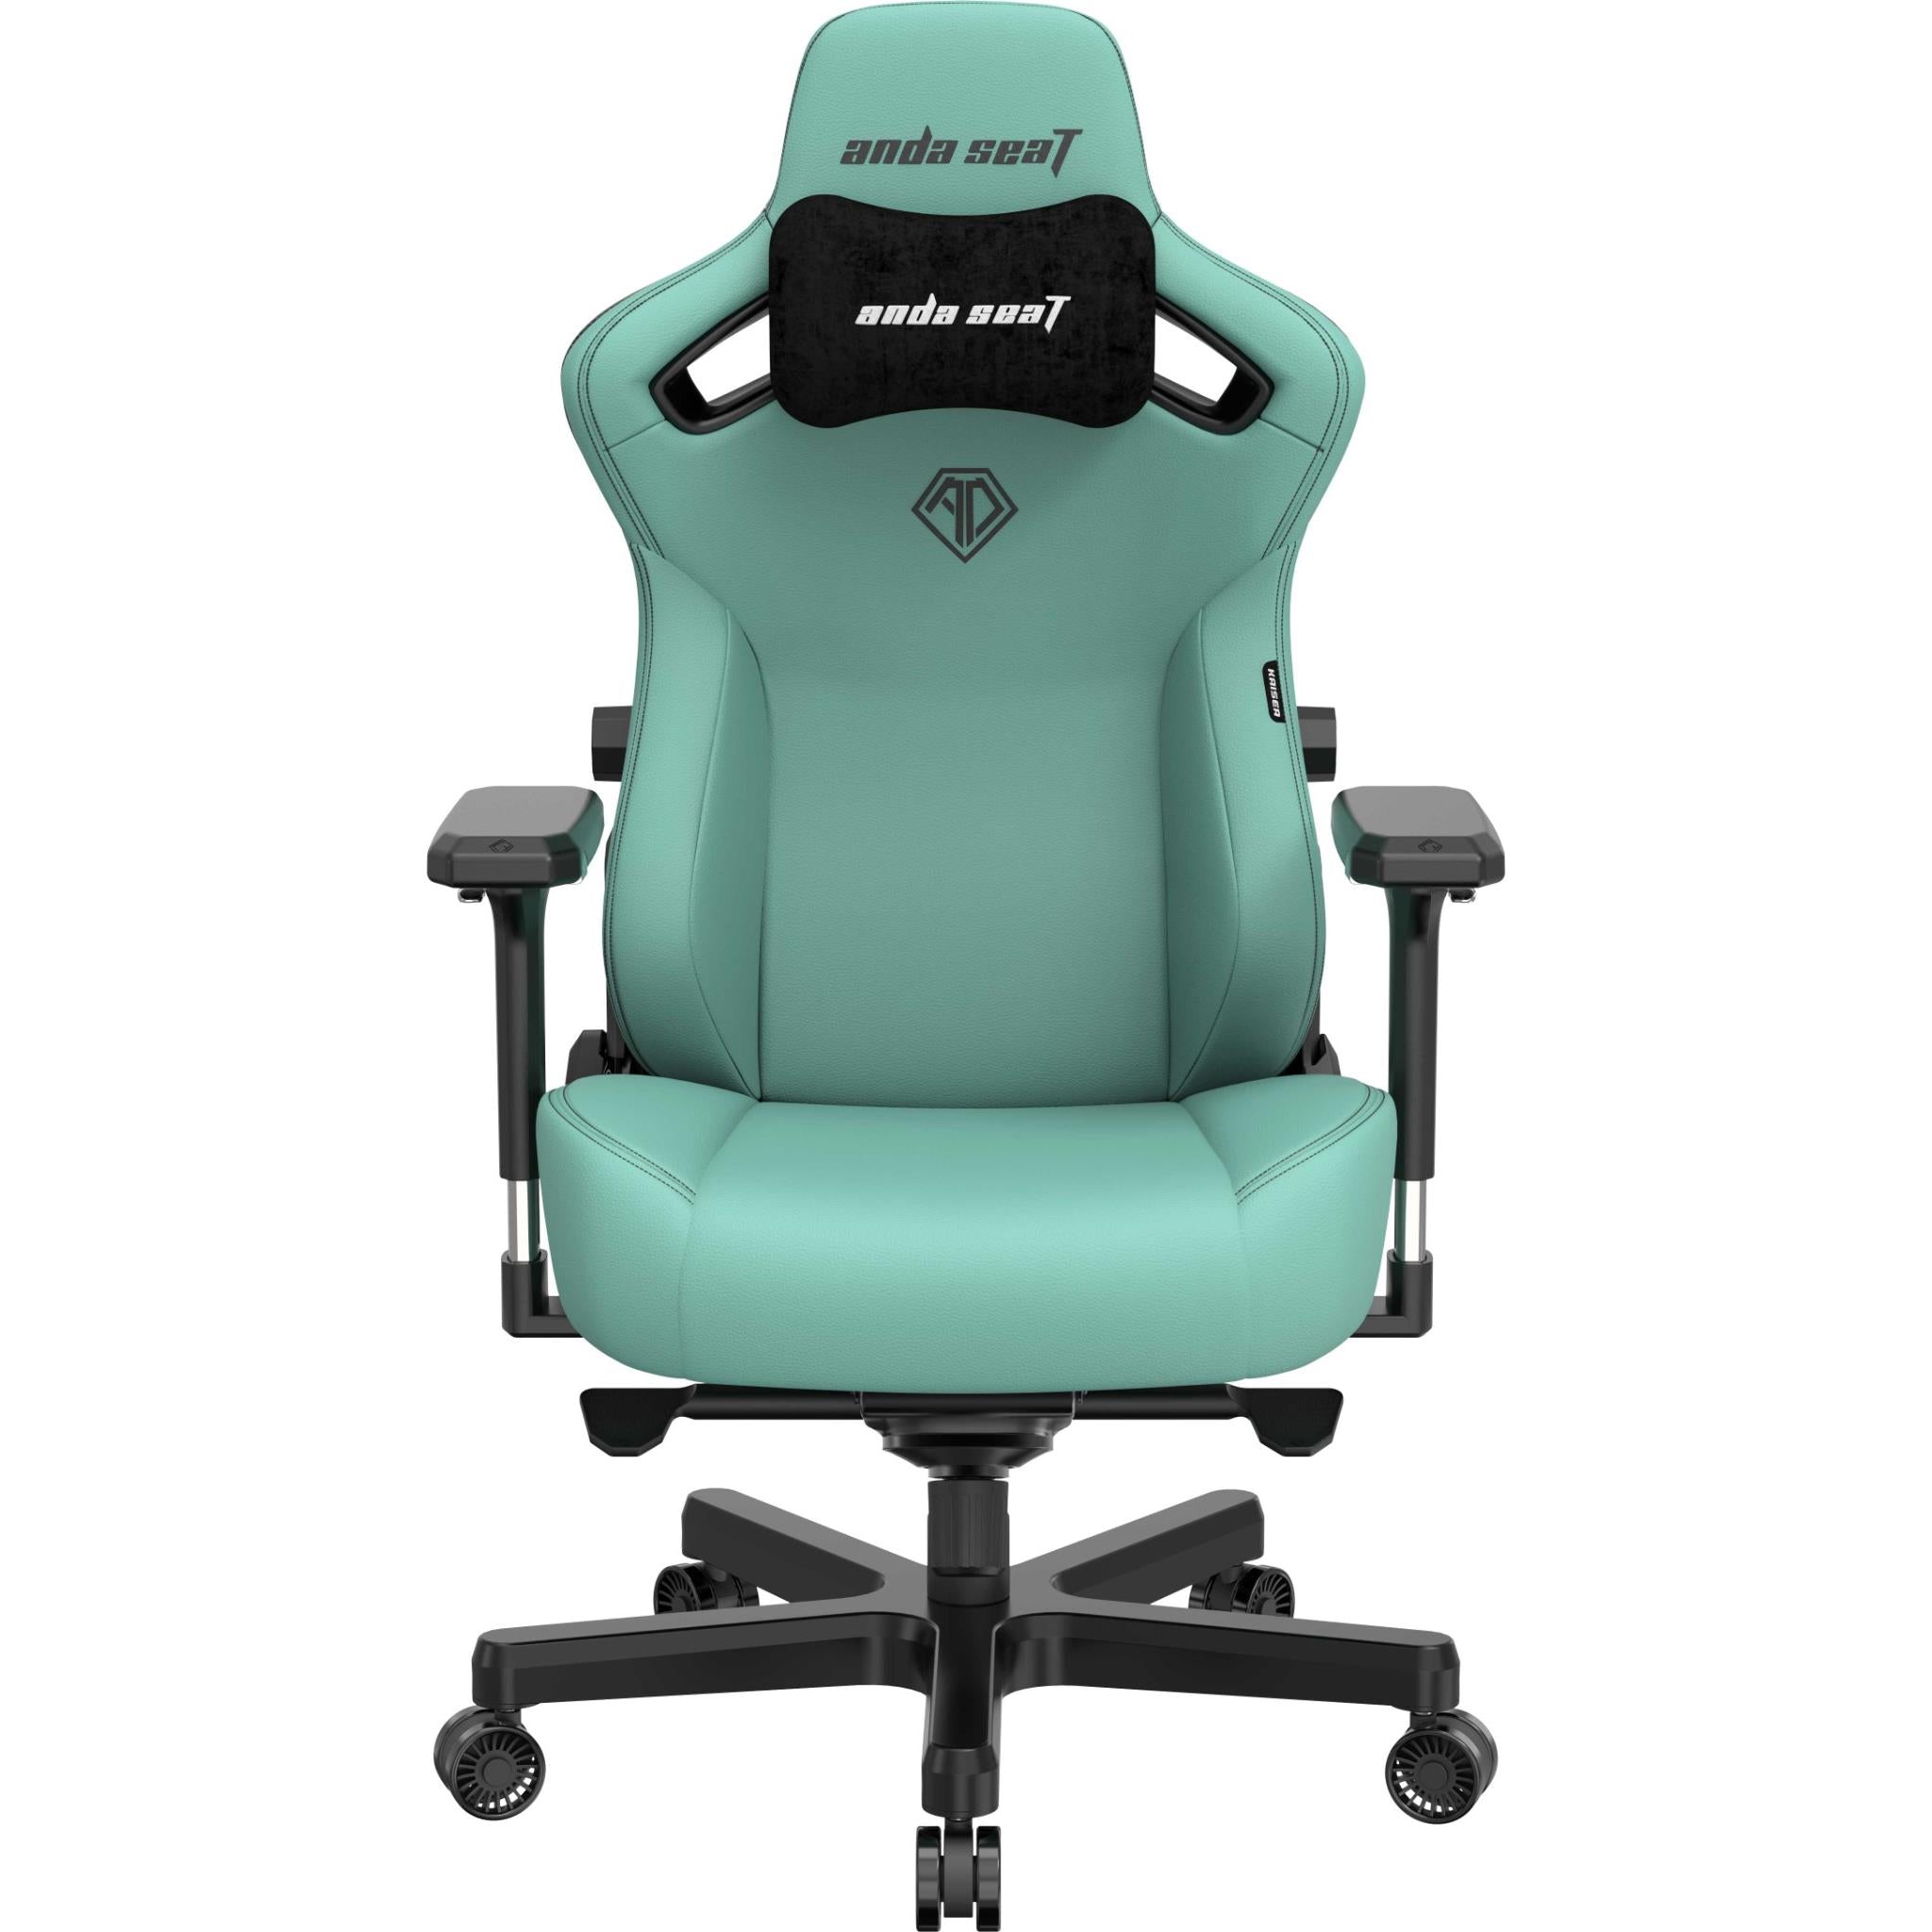 anda seat kaiser 3 series premium gaming chair green (large)